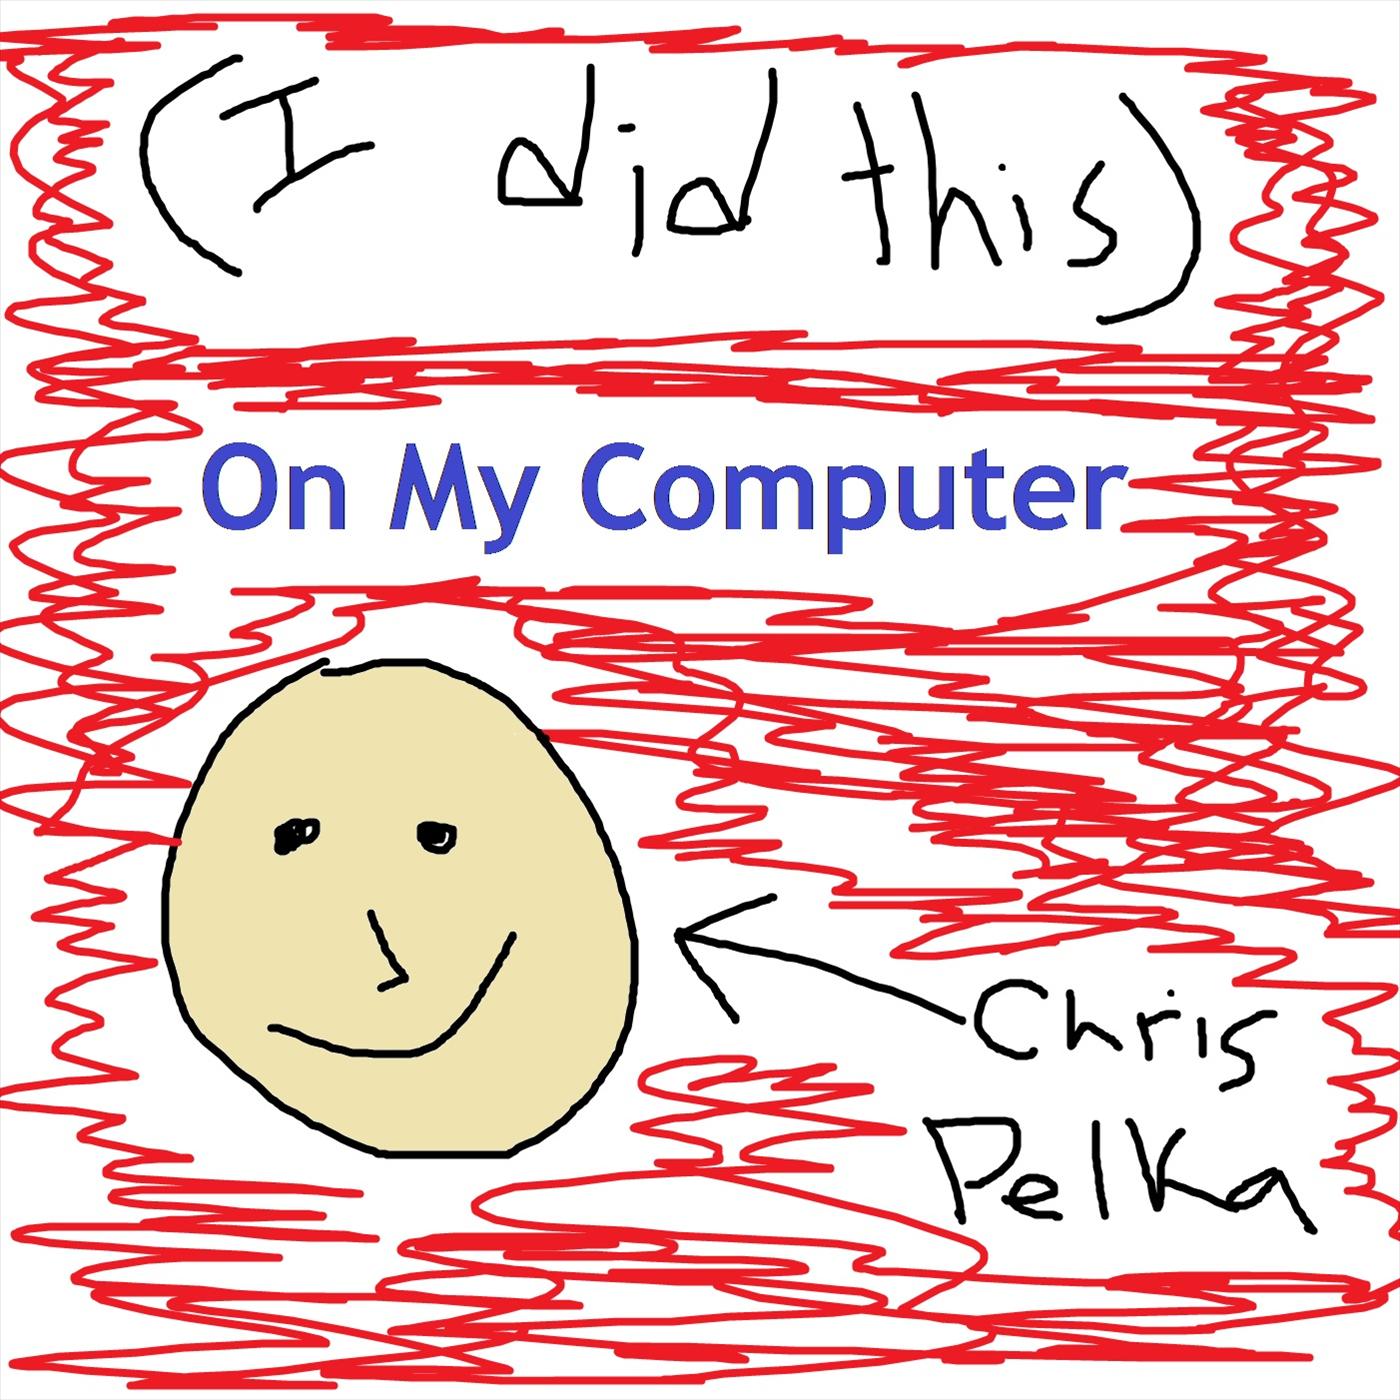 On My Computer